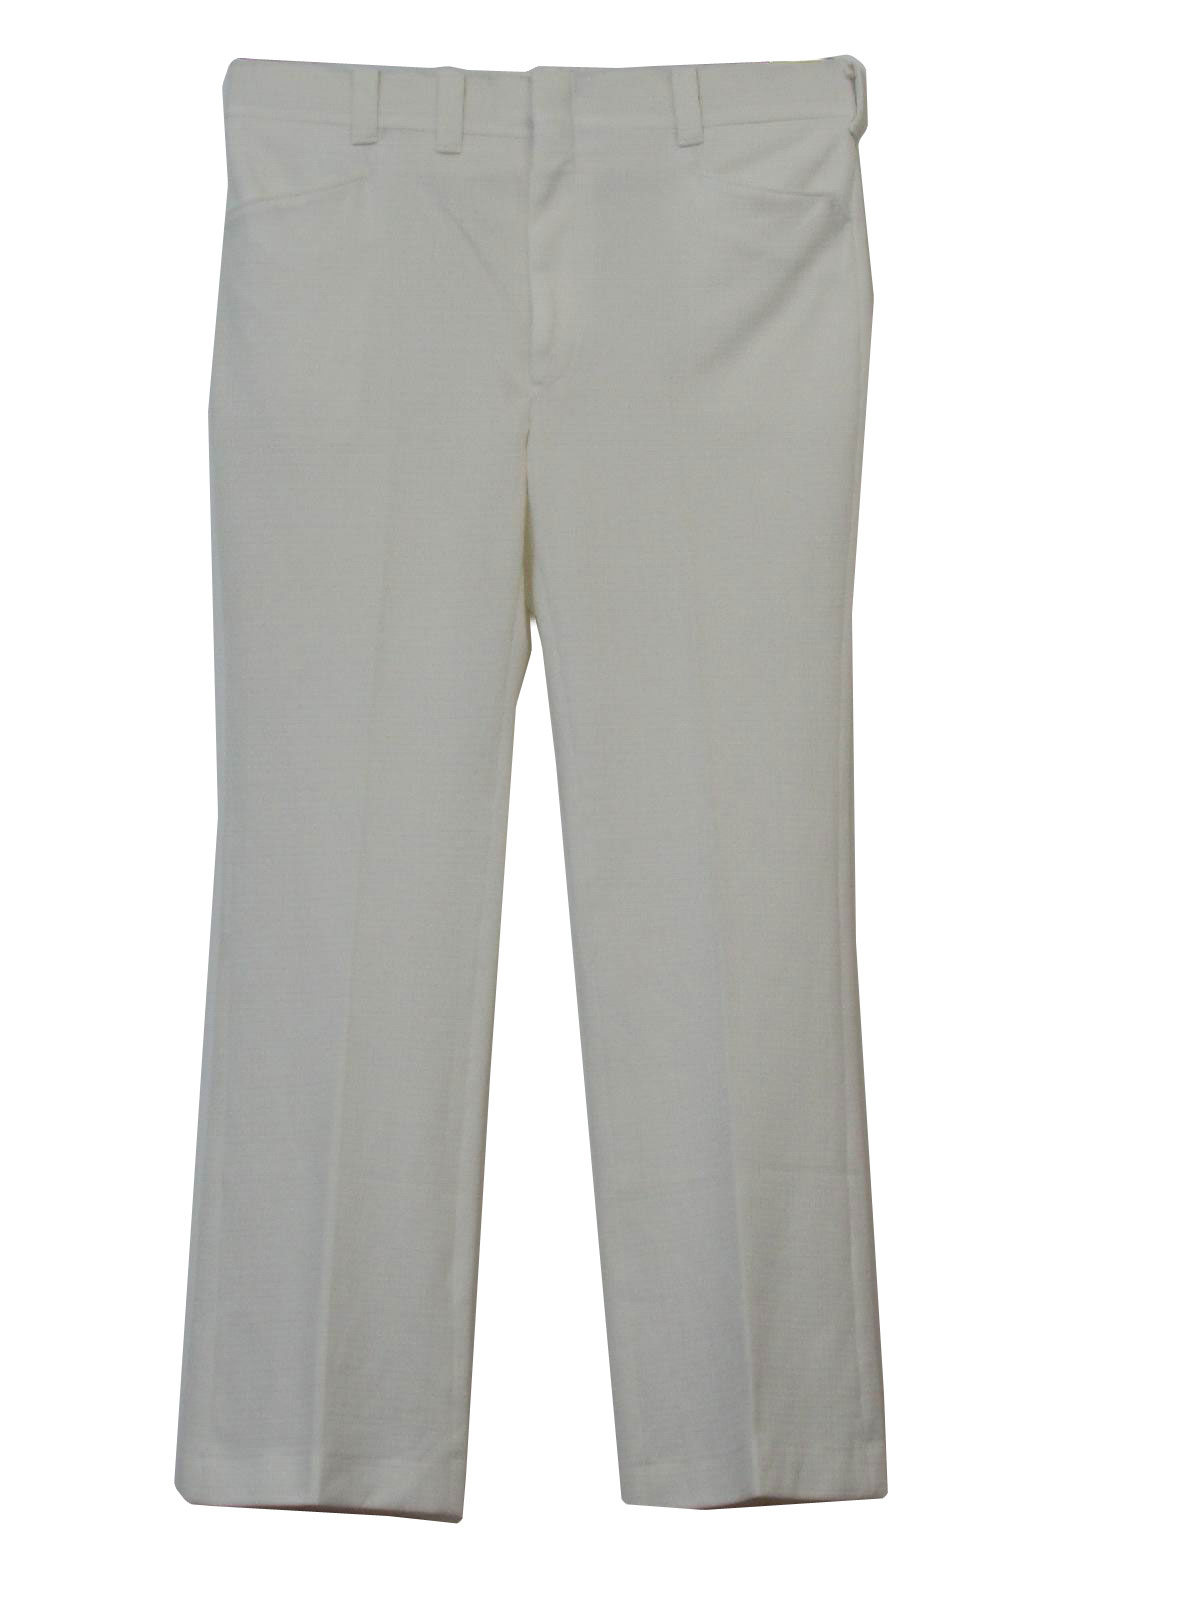 Retro 70's Flared Pants / Flares: 70s -Knit slacks- Mens off white ...